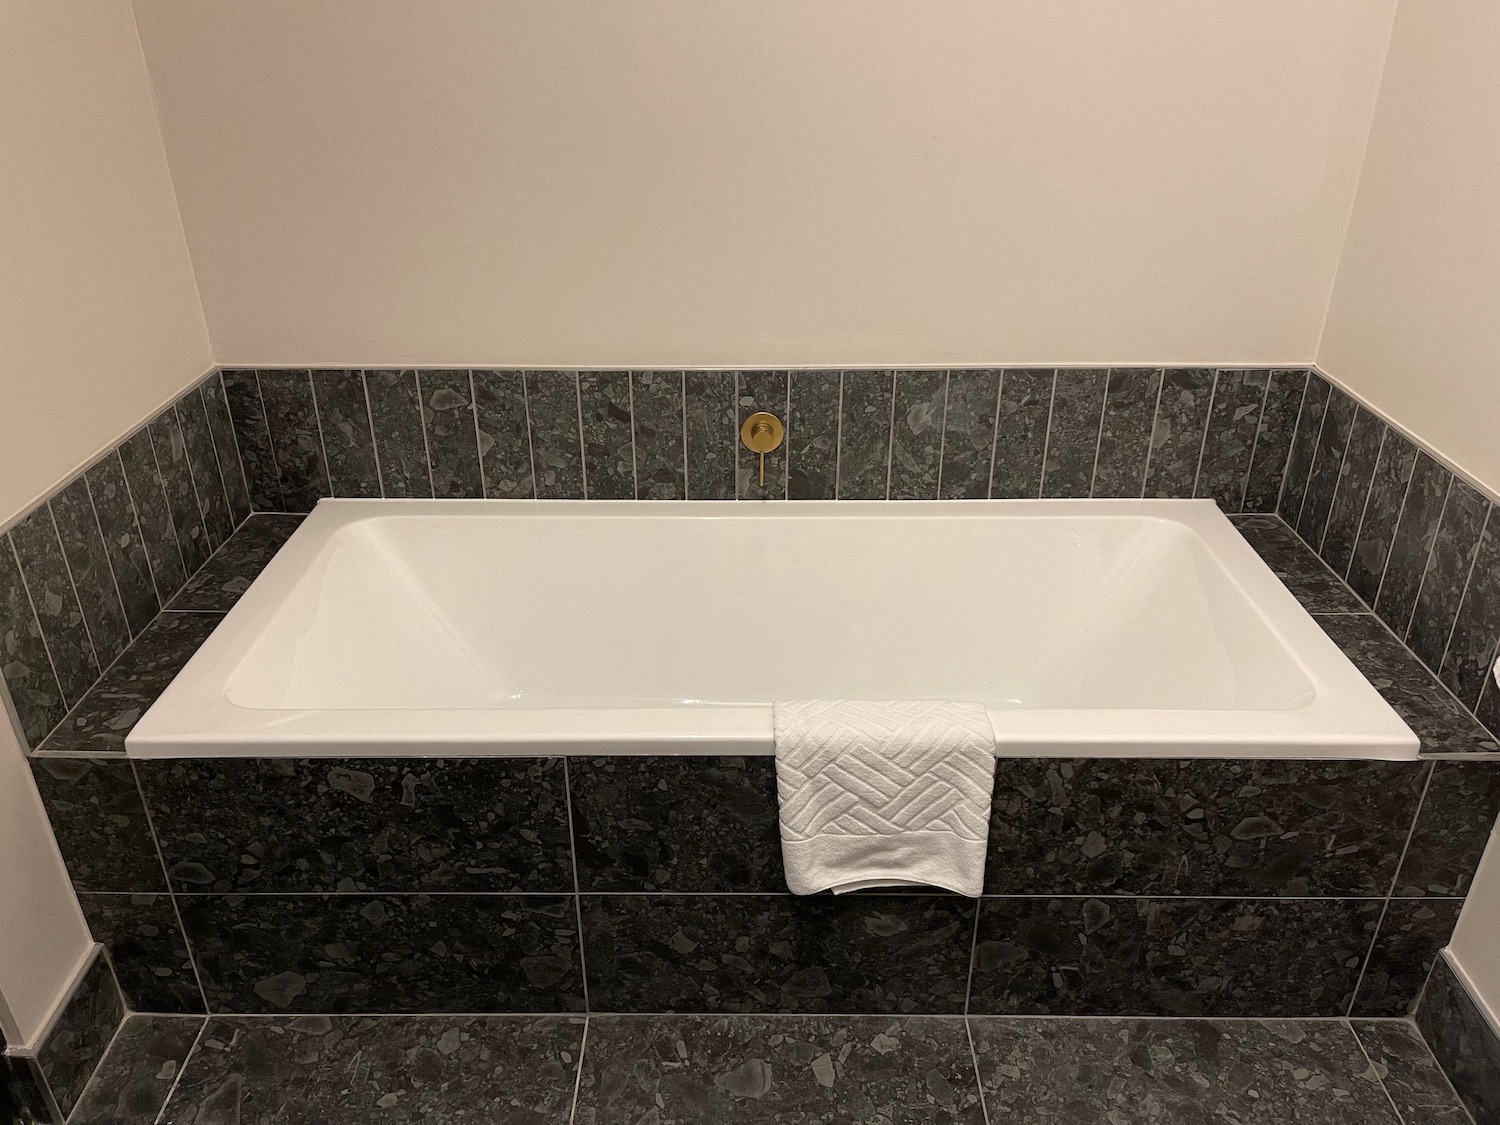 a bathtub with a towel on the side